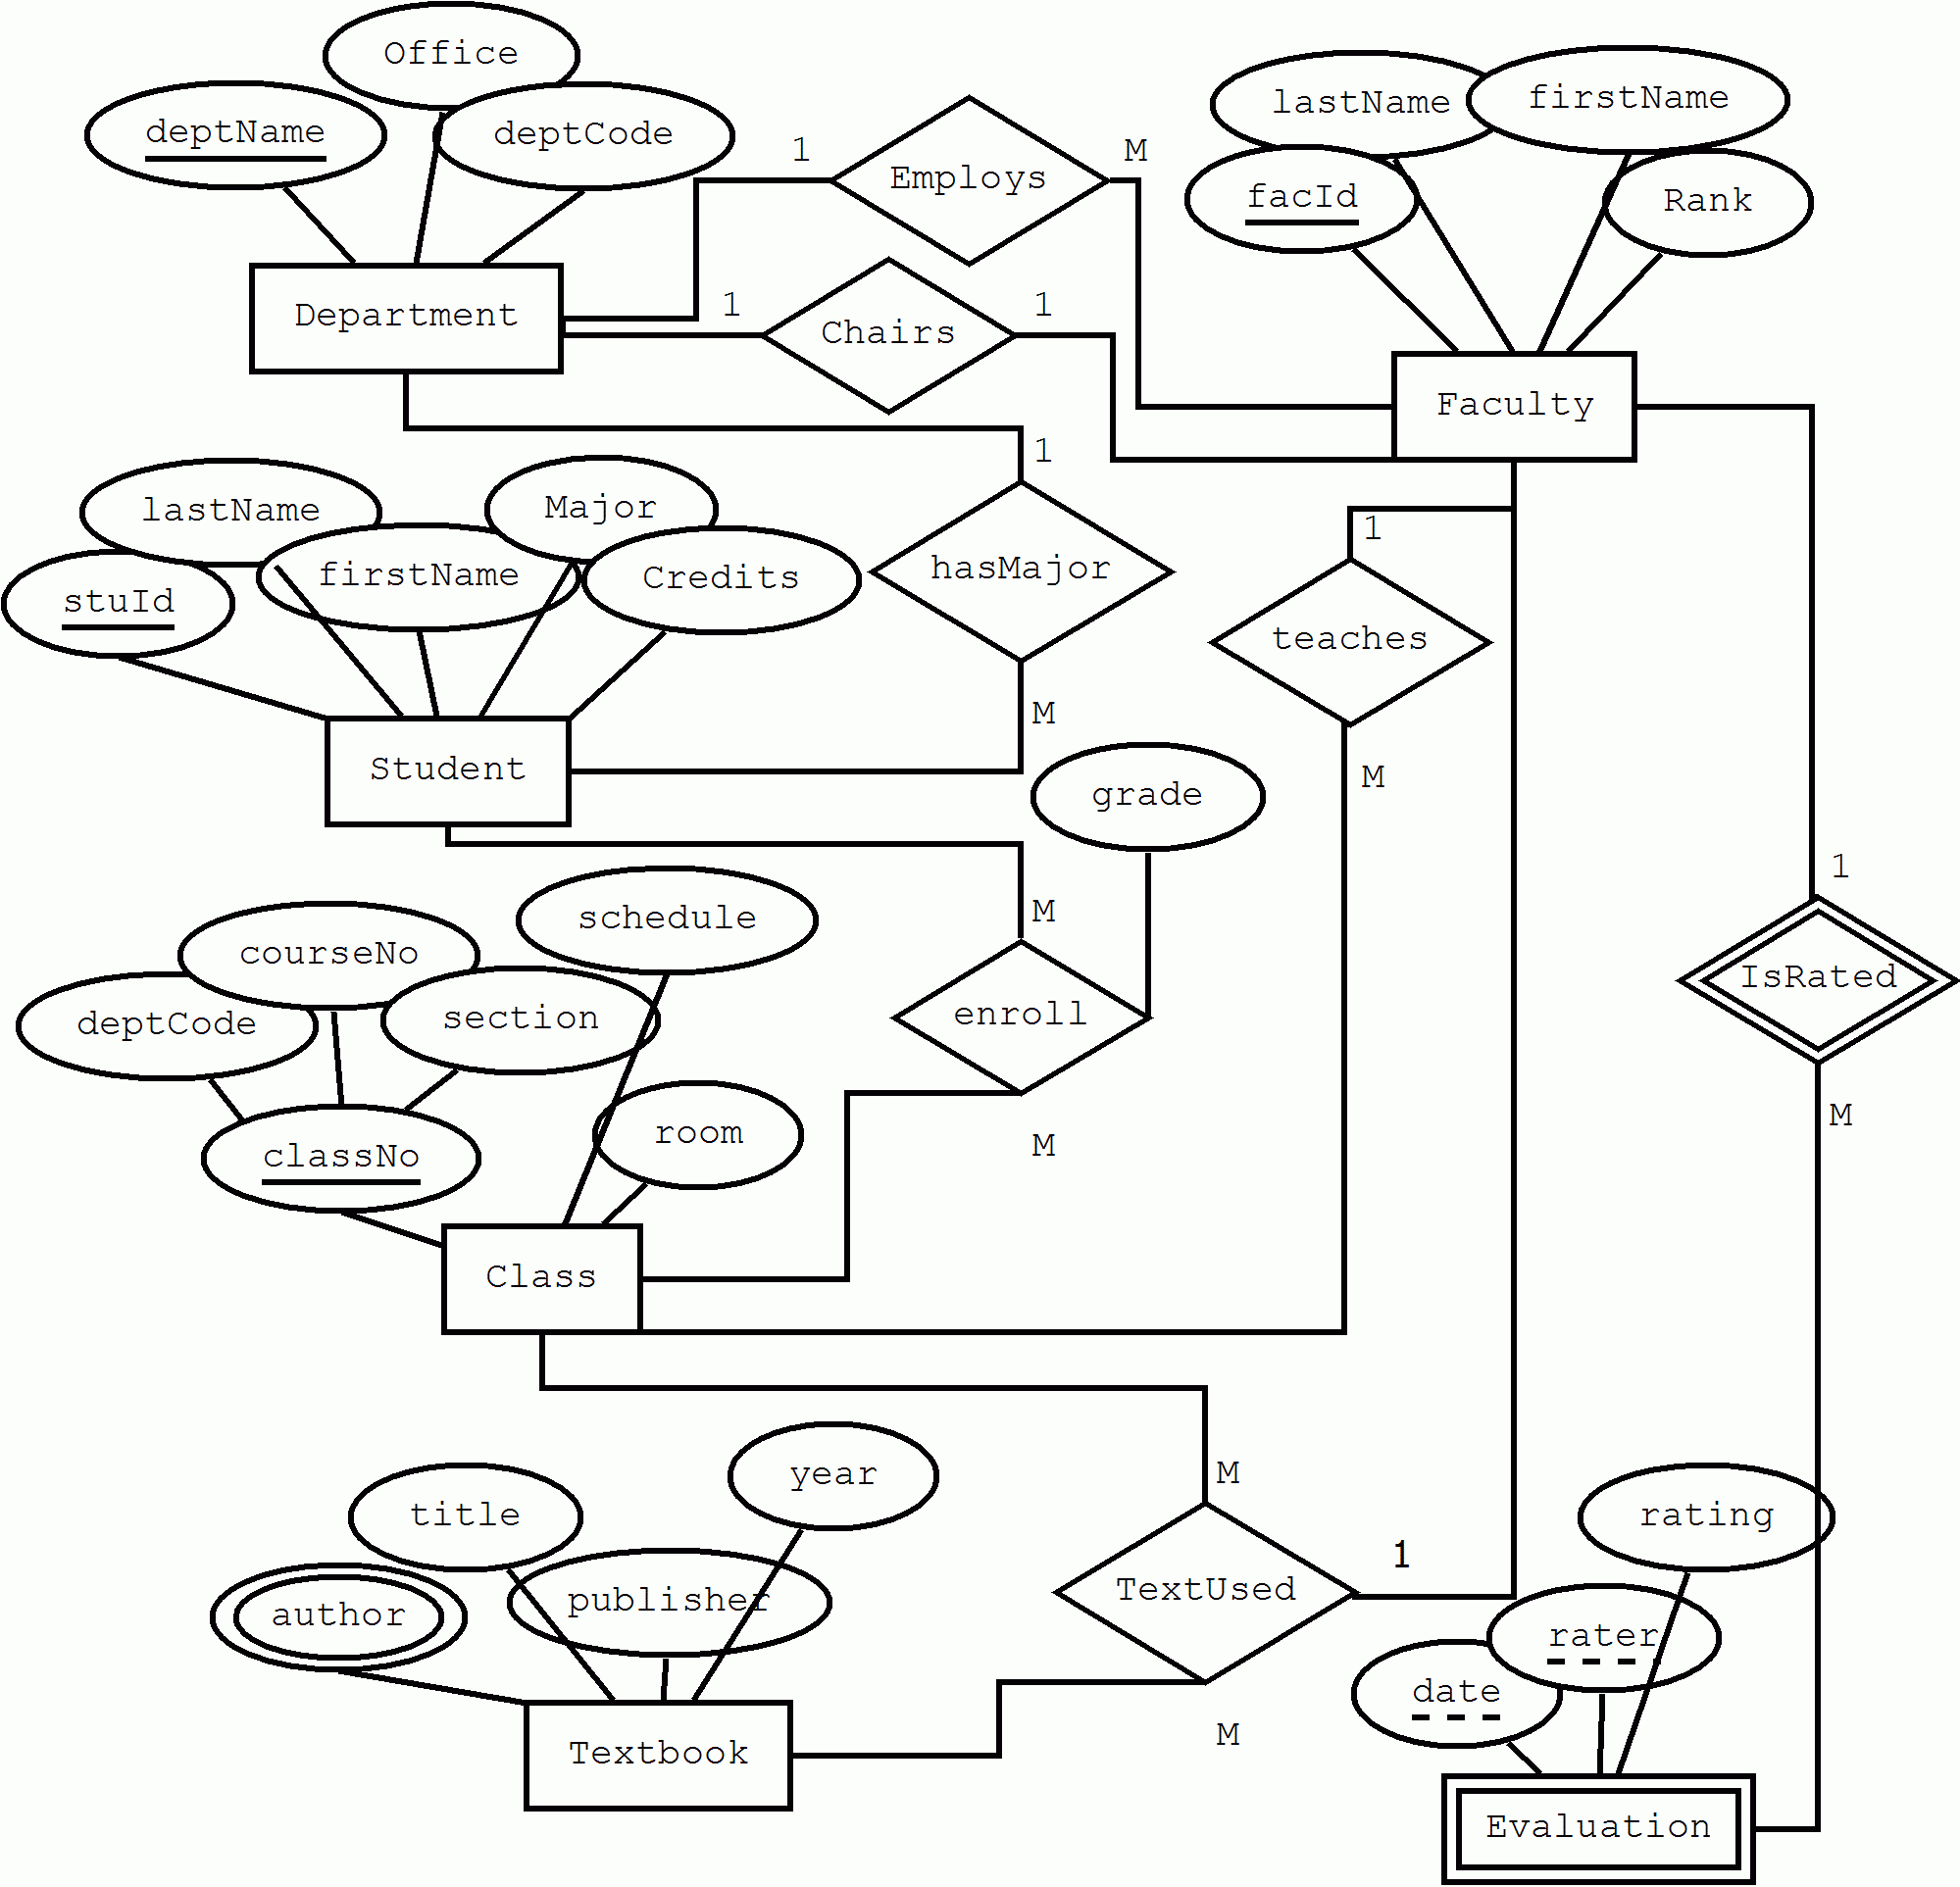 The Entity-Relationship Model in Entity Relationship Diagram Key